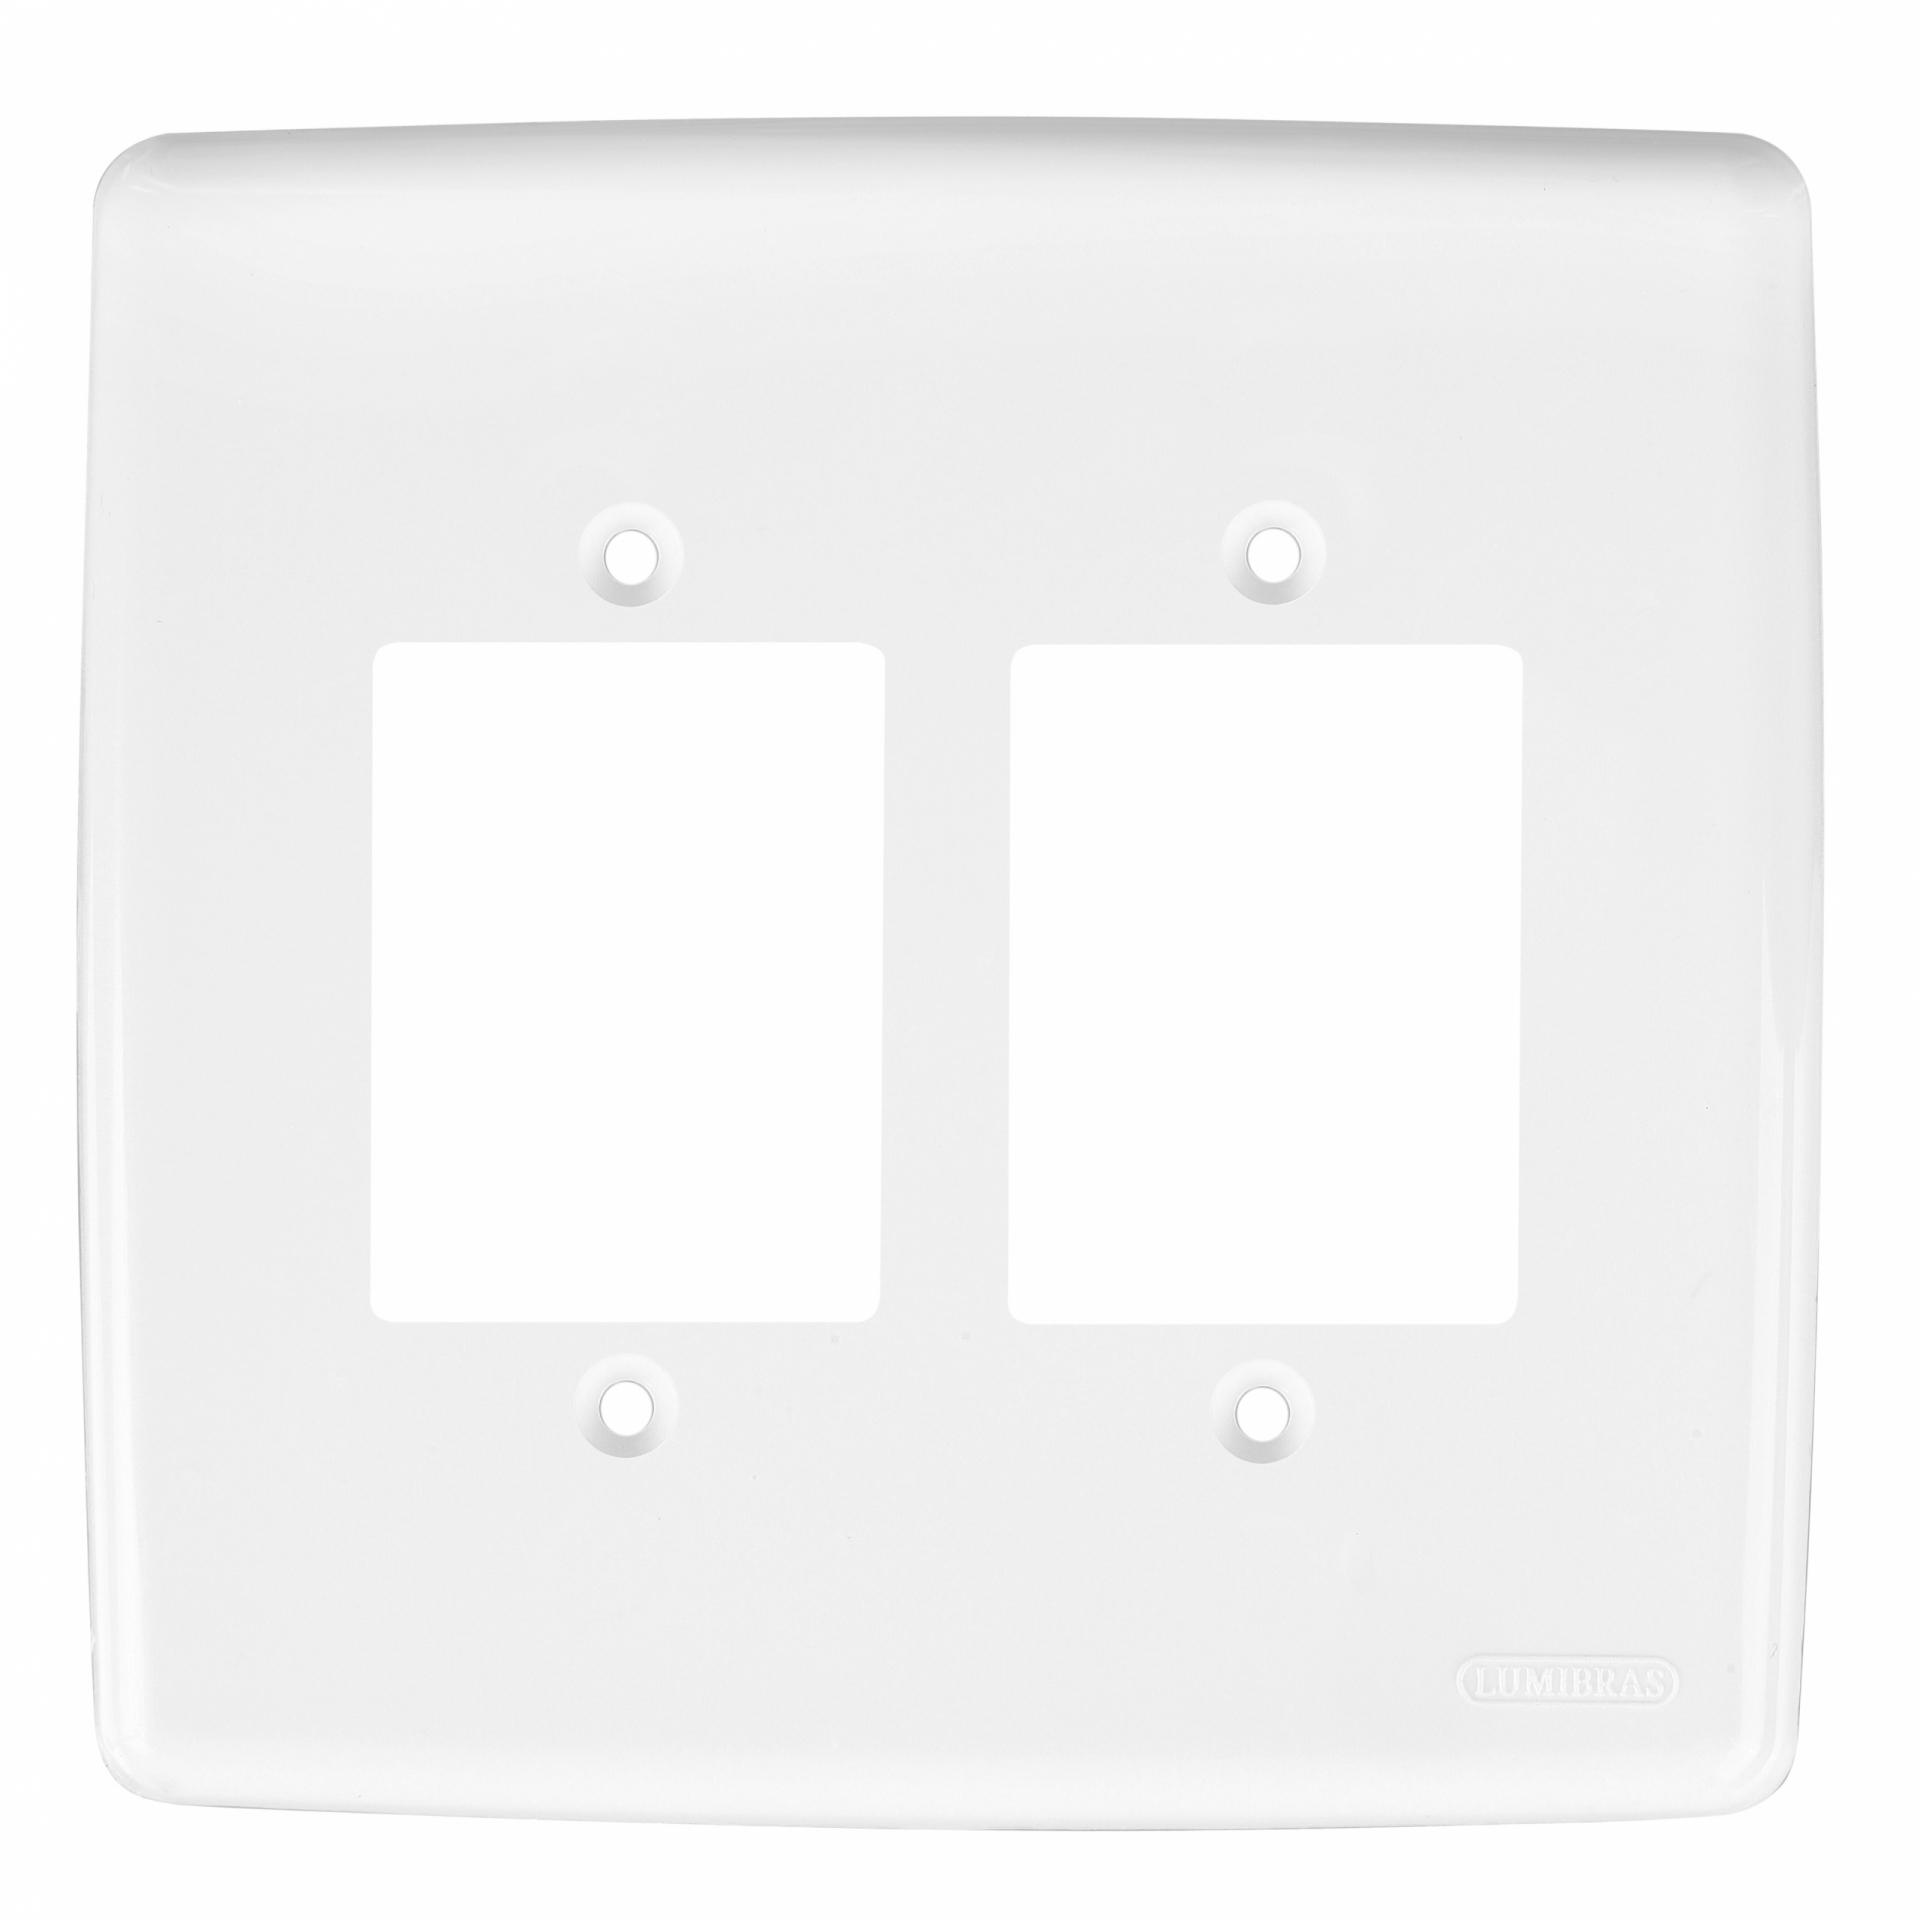 Placa 4x4 para 3 interruptores e 3 interruptores